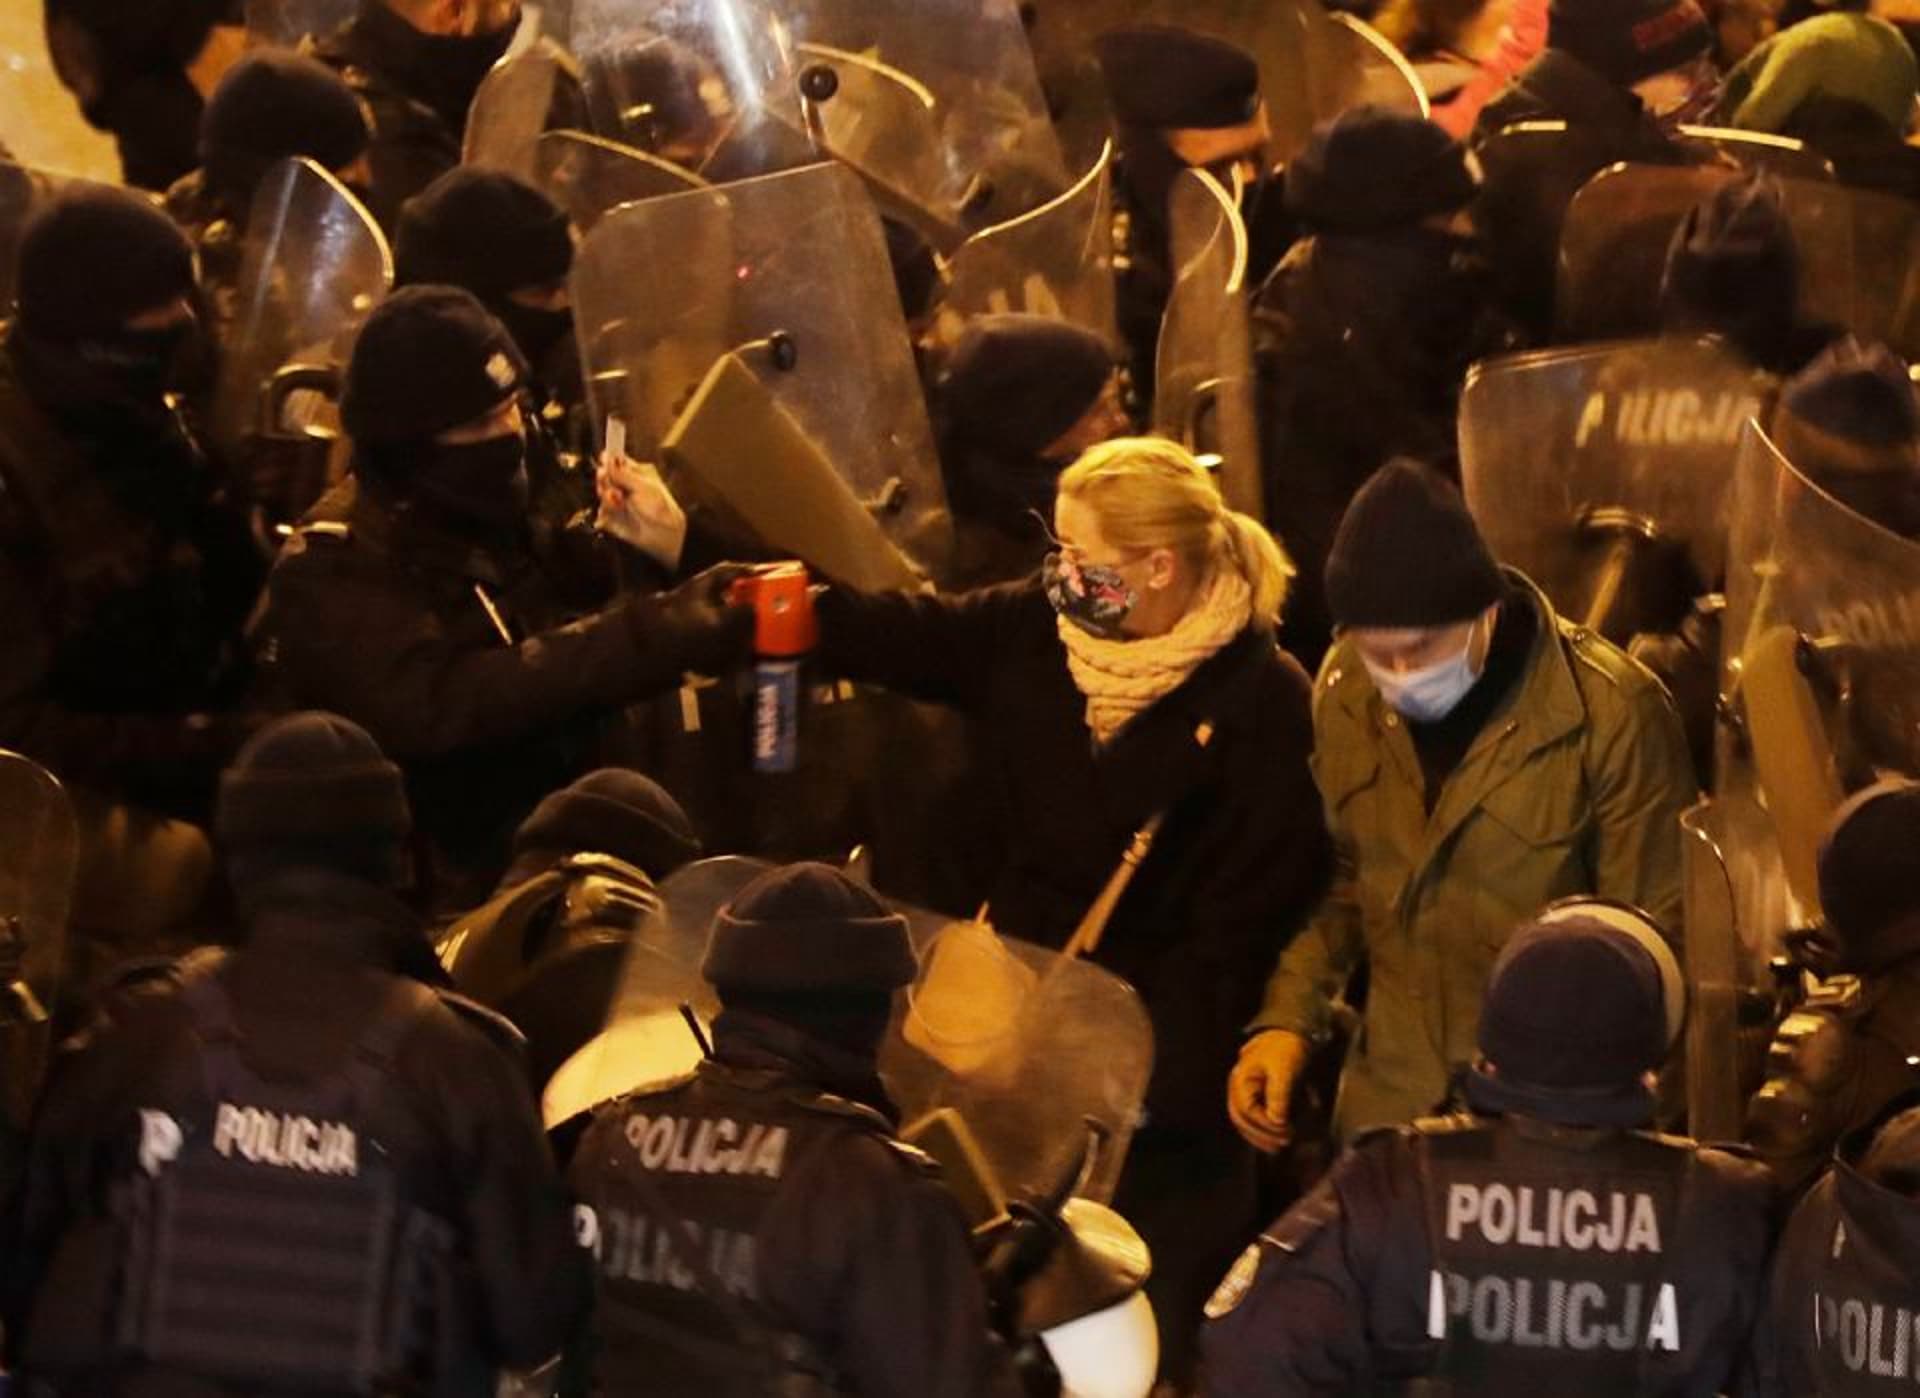 Poslankyně Barbara Nowacka během policejního ataku pepřovým sprejem. (Foto Facebook Gazety wyborcze)